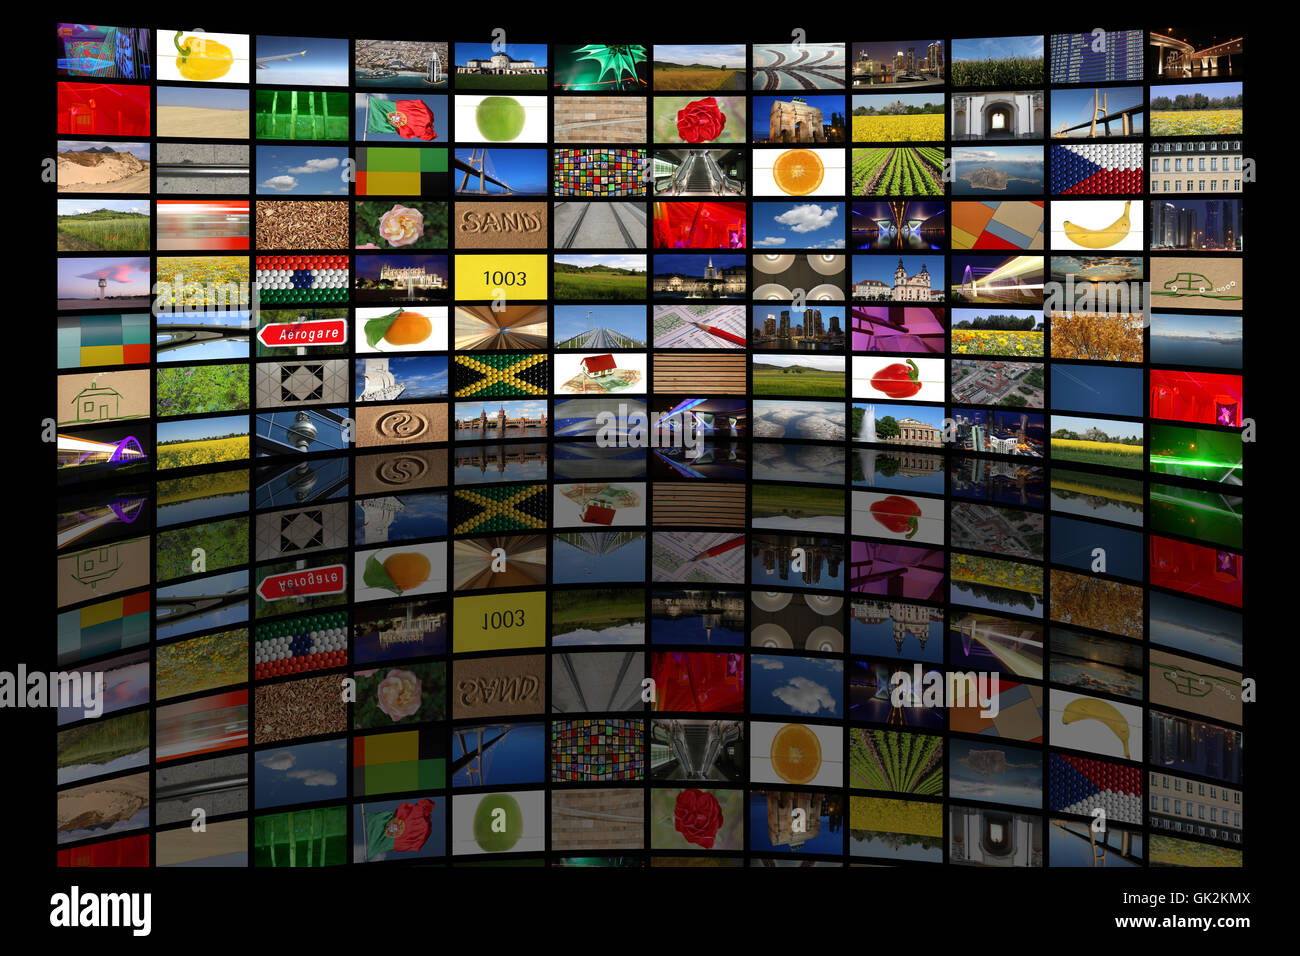 mirroring television tv Stock Photo